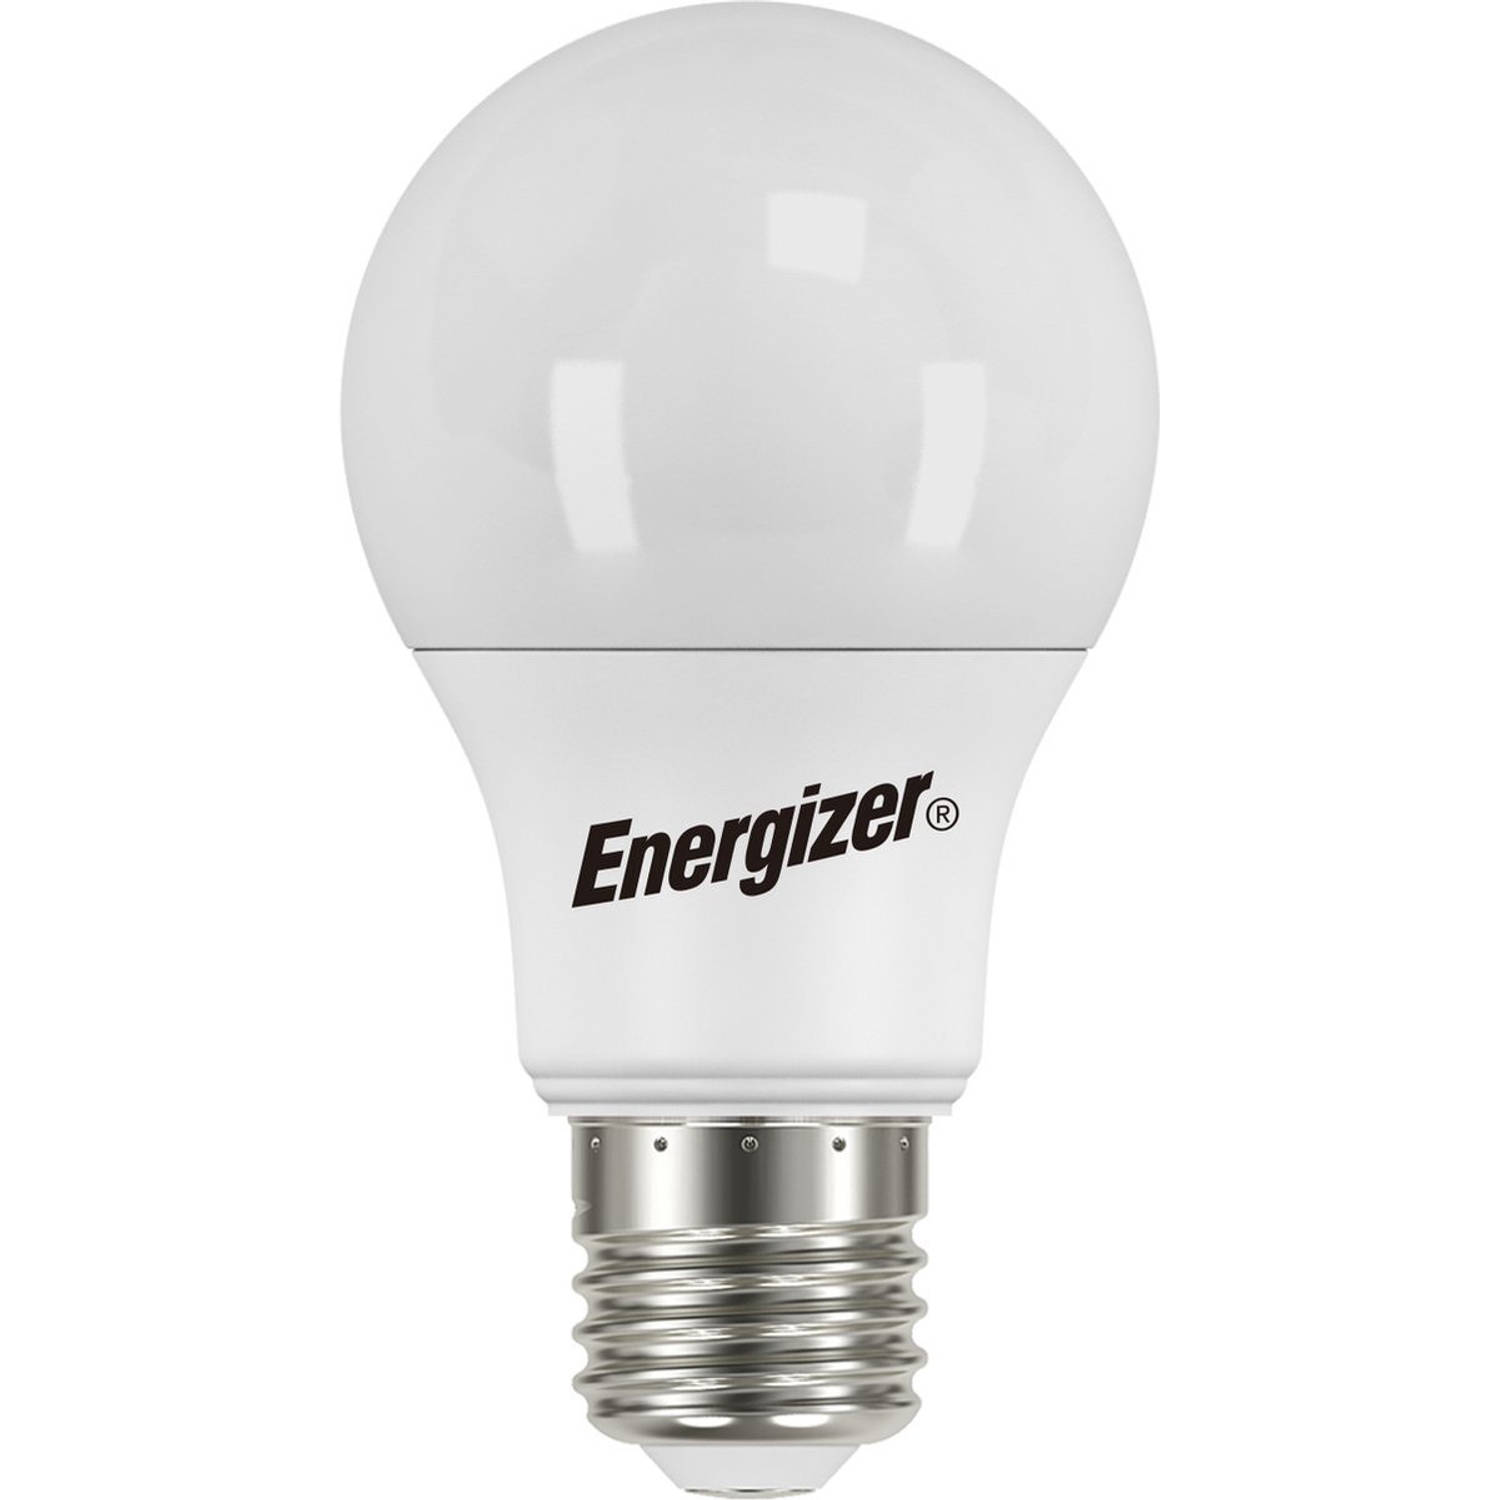 Energizer energiezuinige Led lamp -E27 - 15,3 Watt - warmwit licht - niet dimbaar - 1 stuk